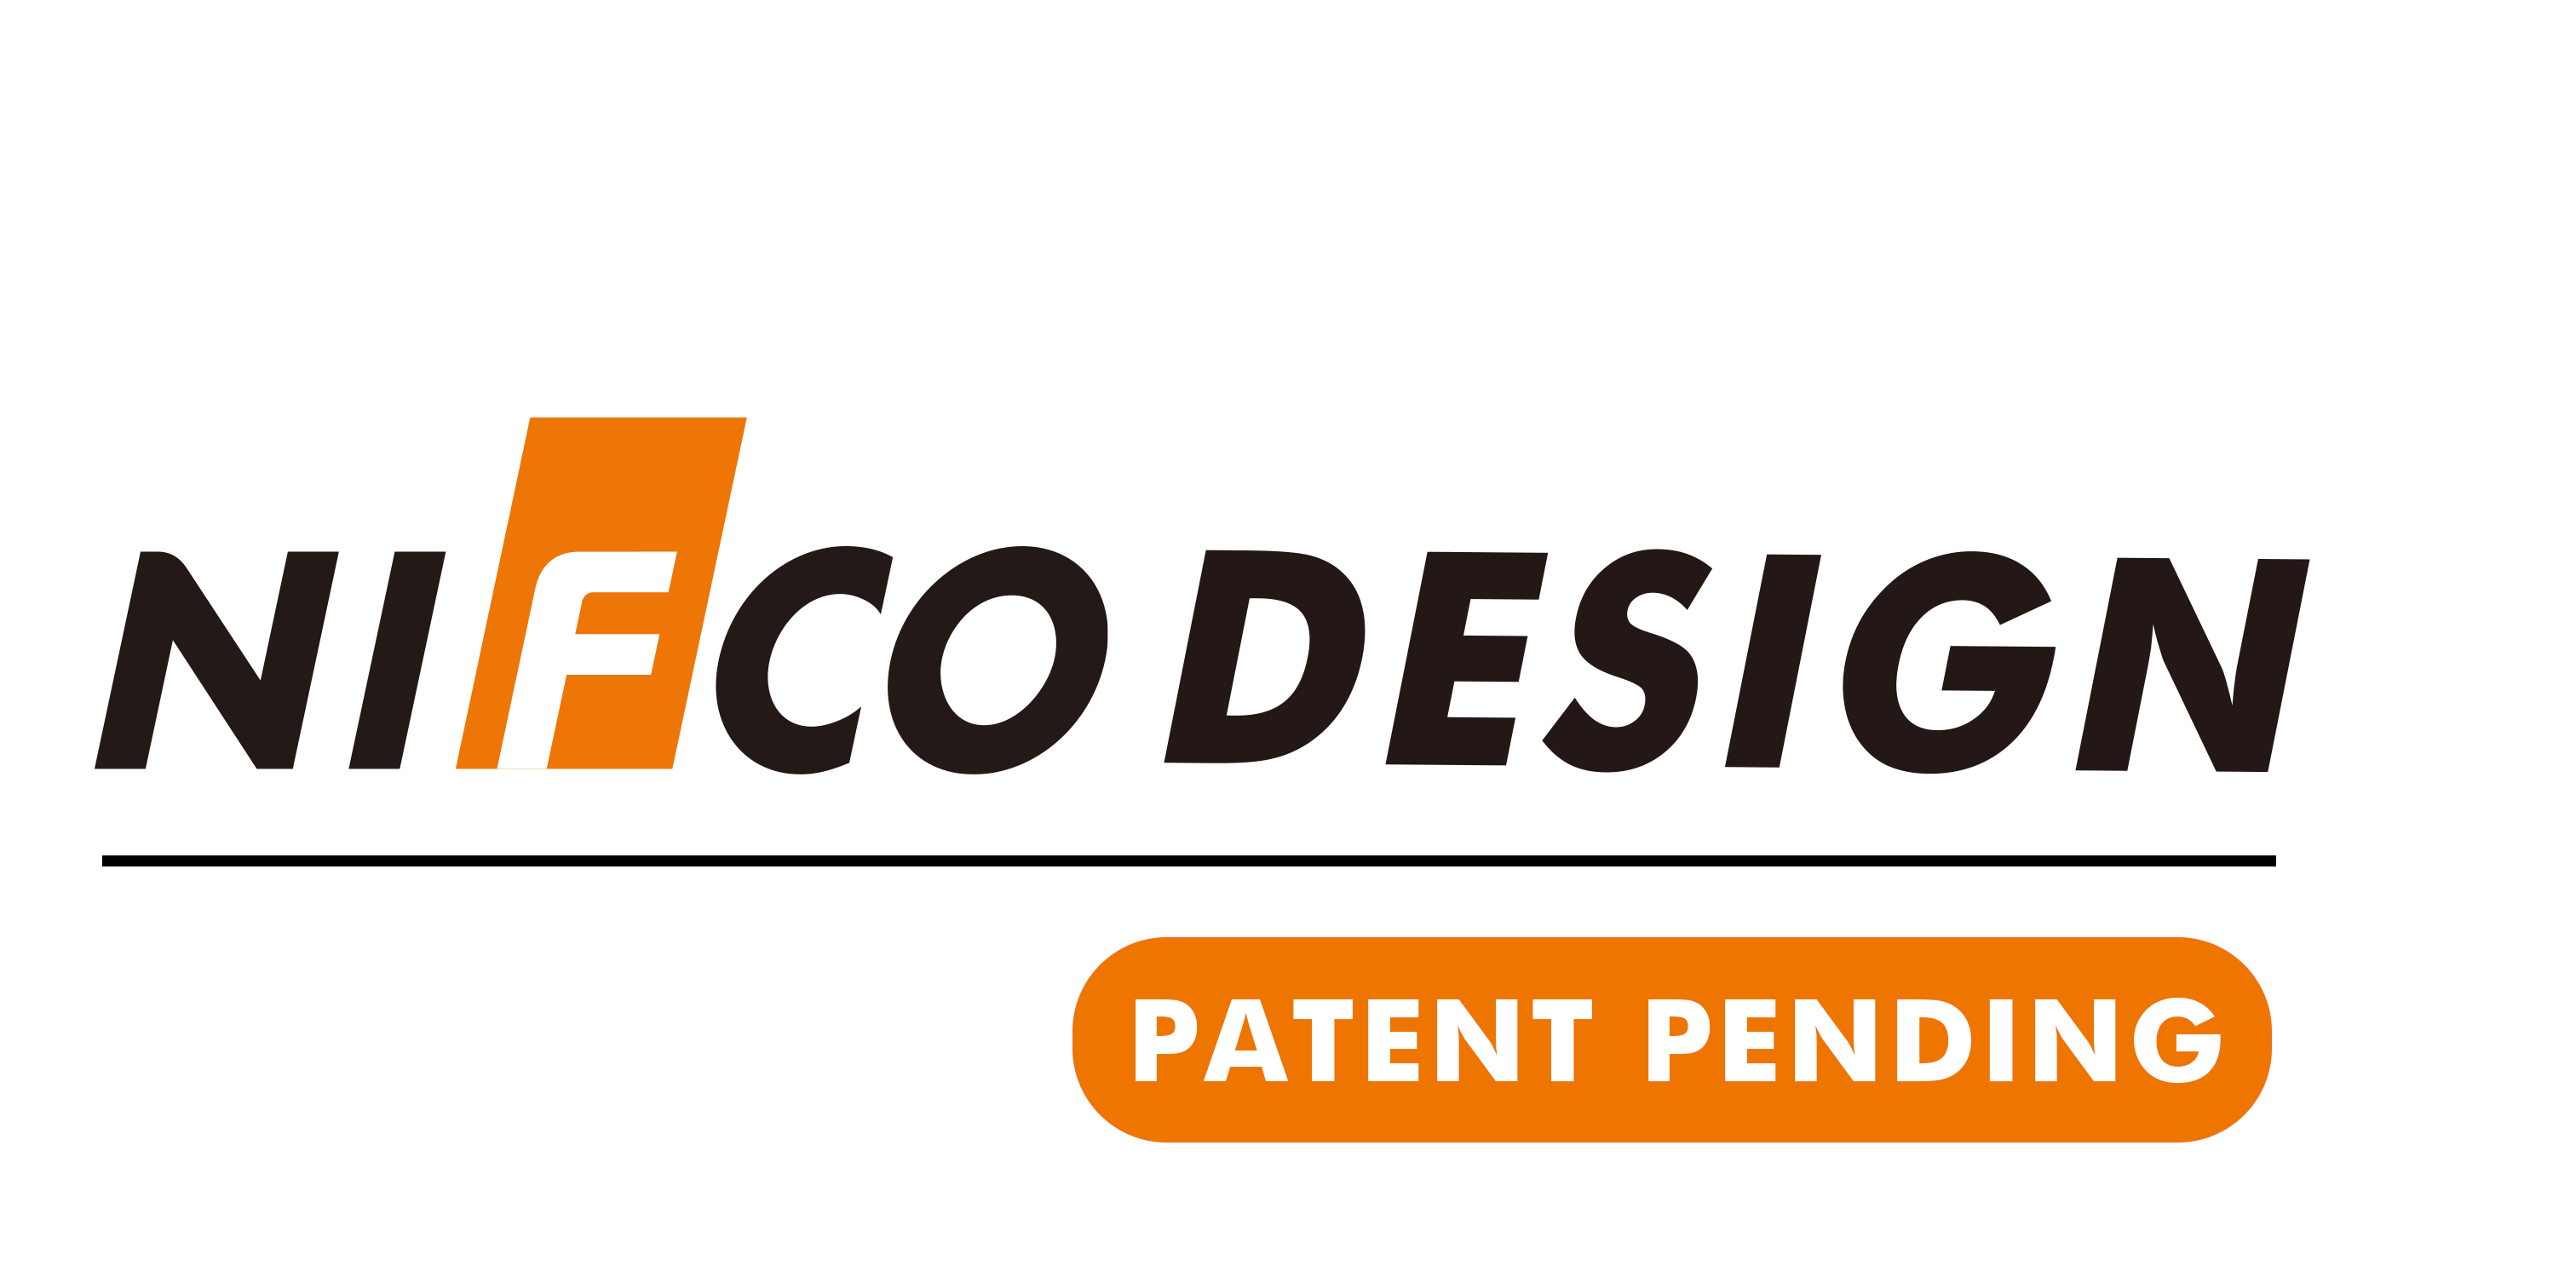 Nifco Design Header Image - Patent Pending